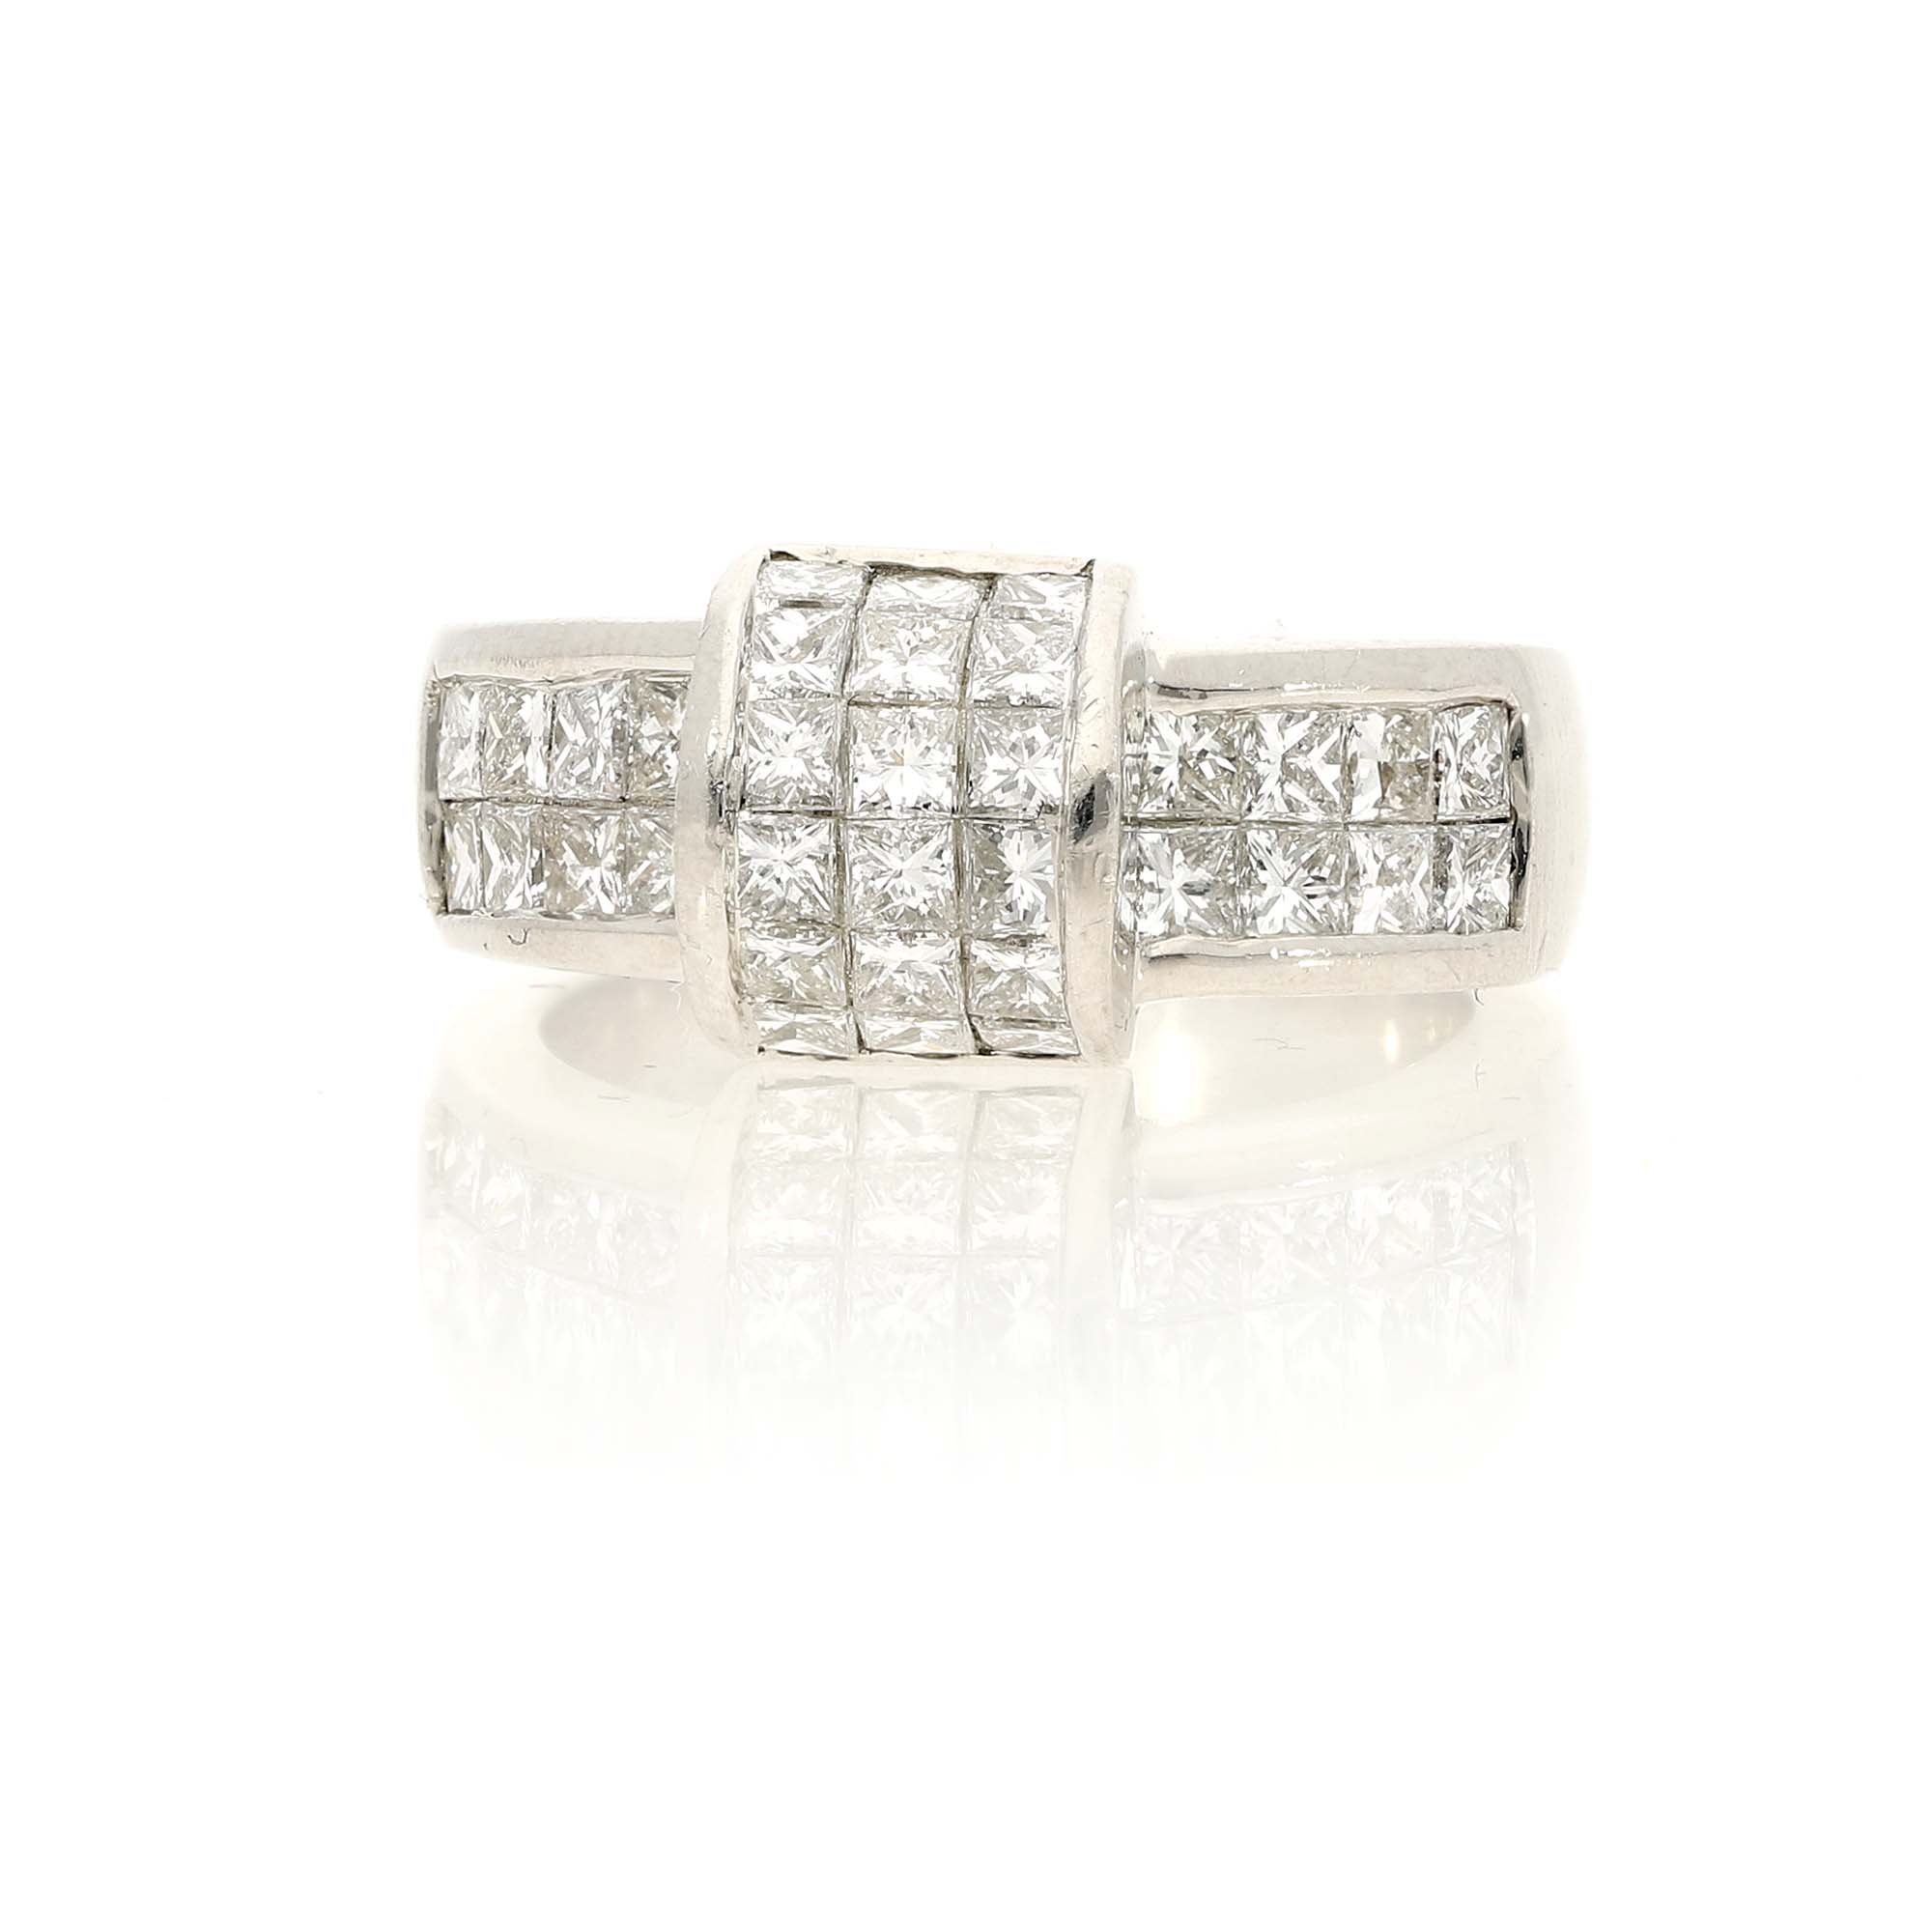 Buy Genuine Lab Grown Diamond Casual Rings Online For Women